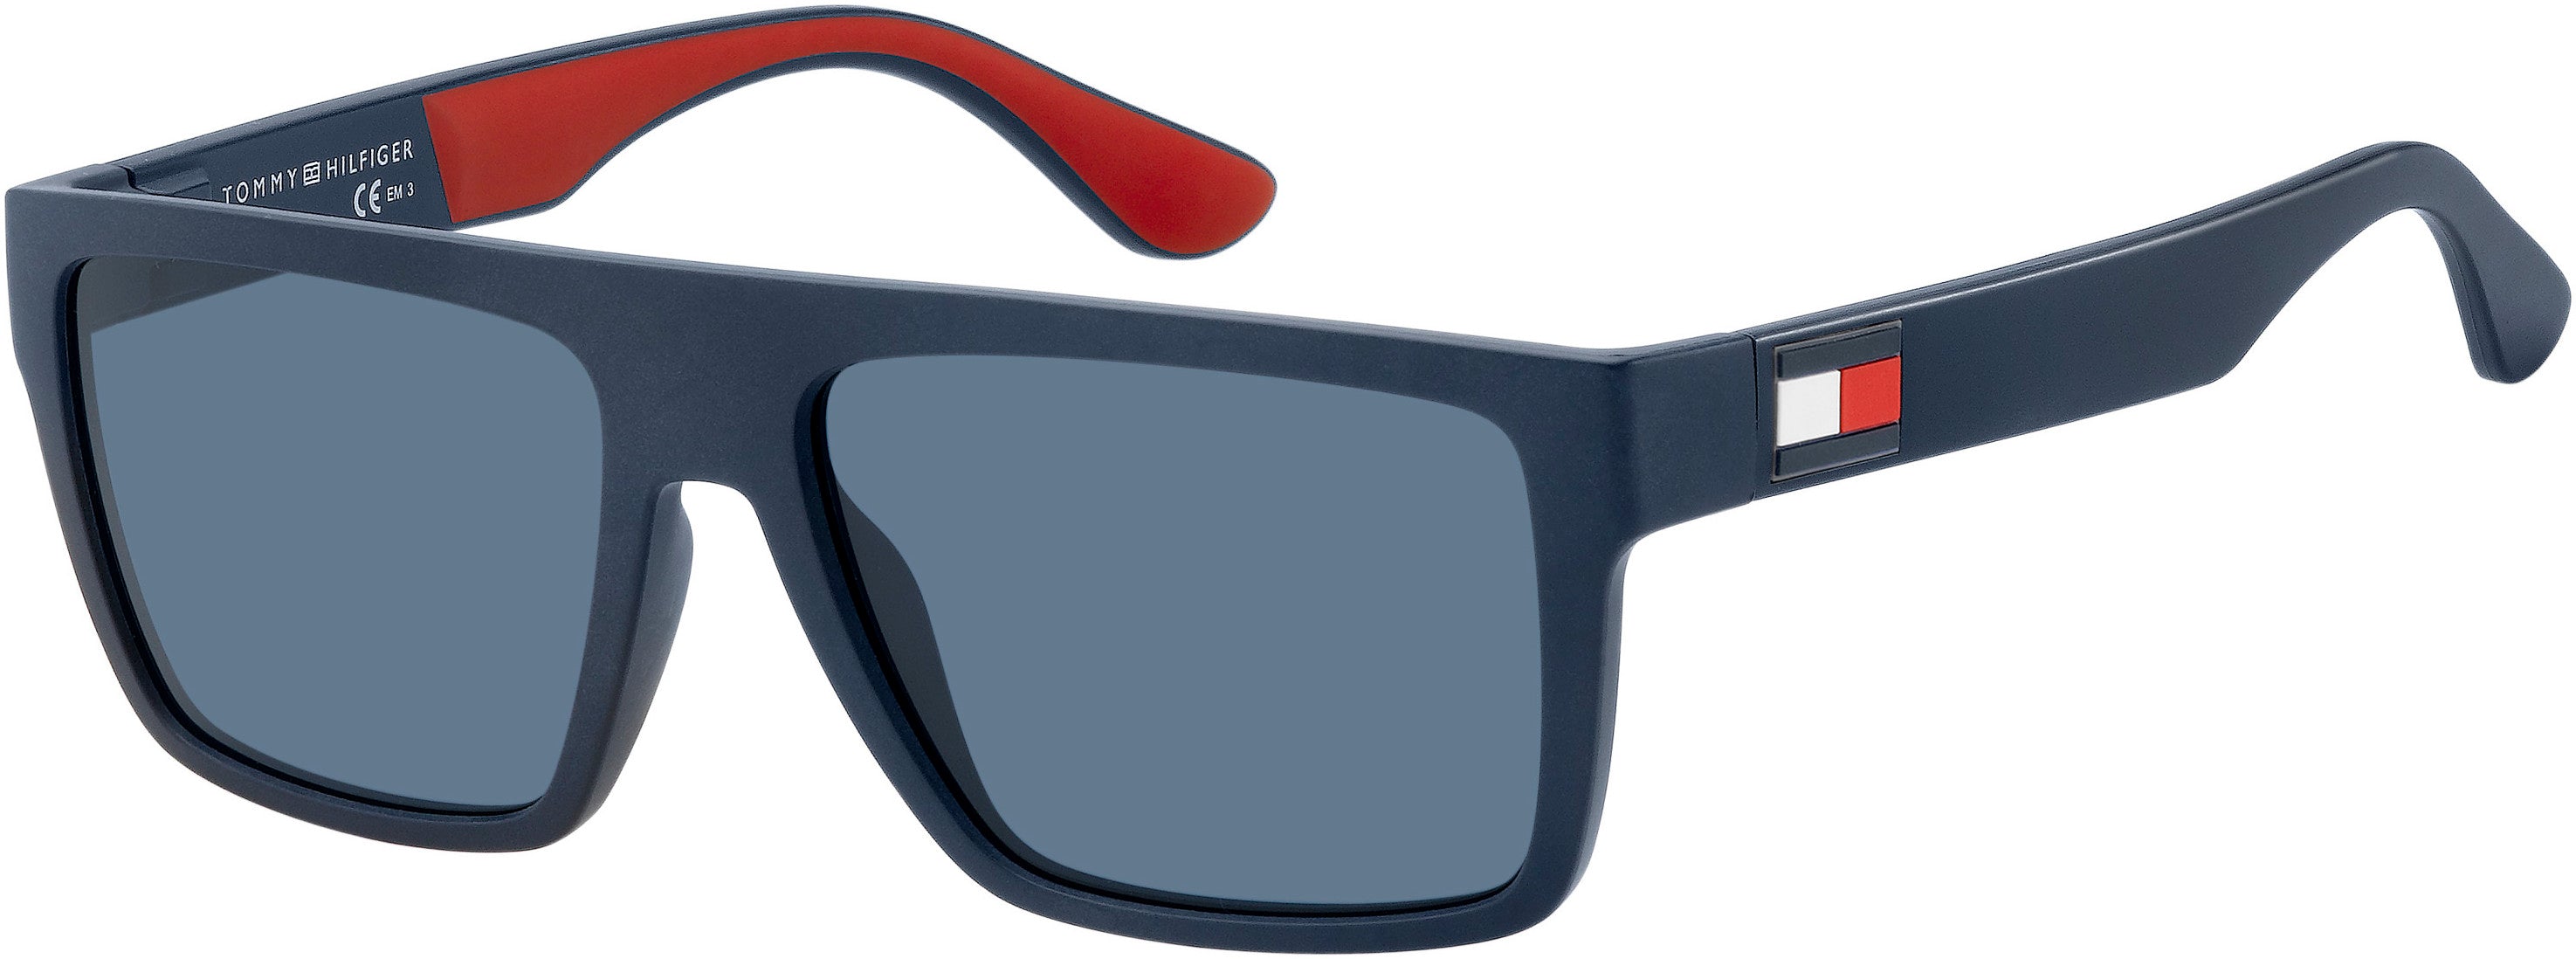 Tommy Hilfiger T. Hilfiger 1605/S Rectangular Sunglasses 0IPQ-0IPQ  Matte Bl Blue (KU Blue)